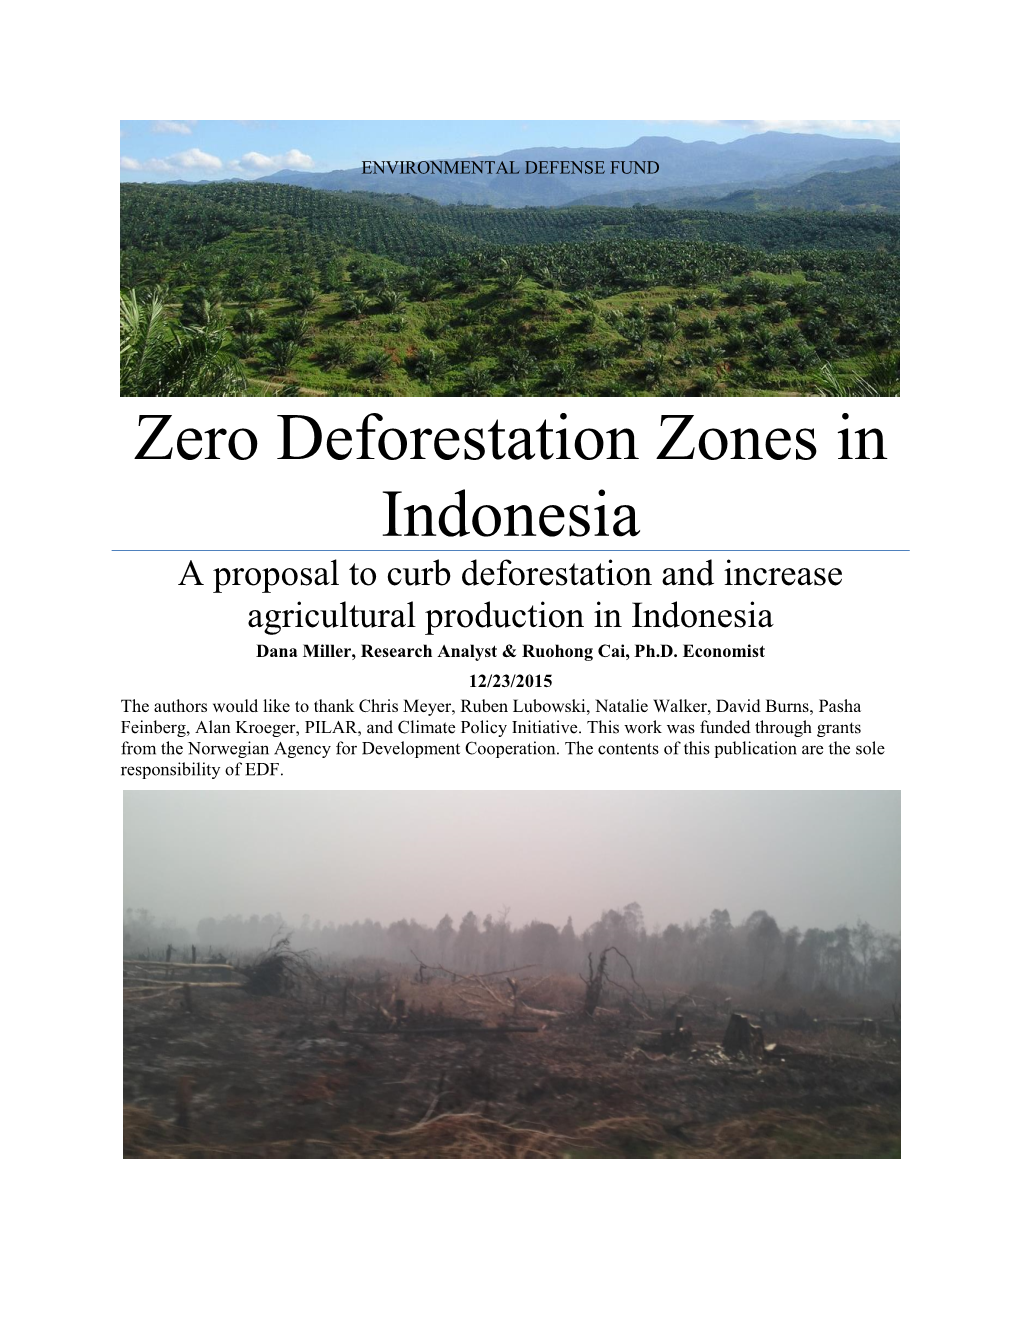 Zero Deforestation Zones in Indonesia